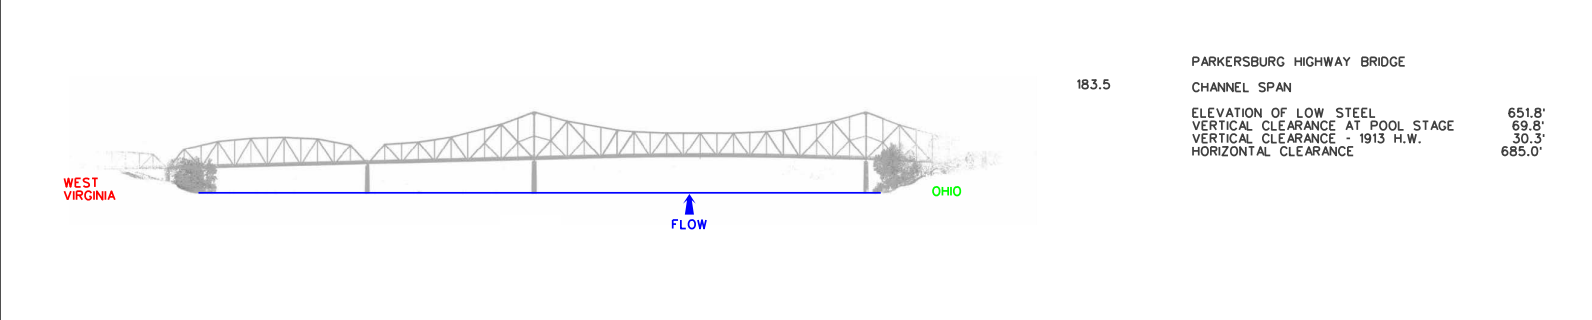 Parkersburg Hwy Bridge Clearances | Bridge Calculator LLC